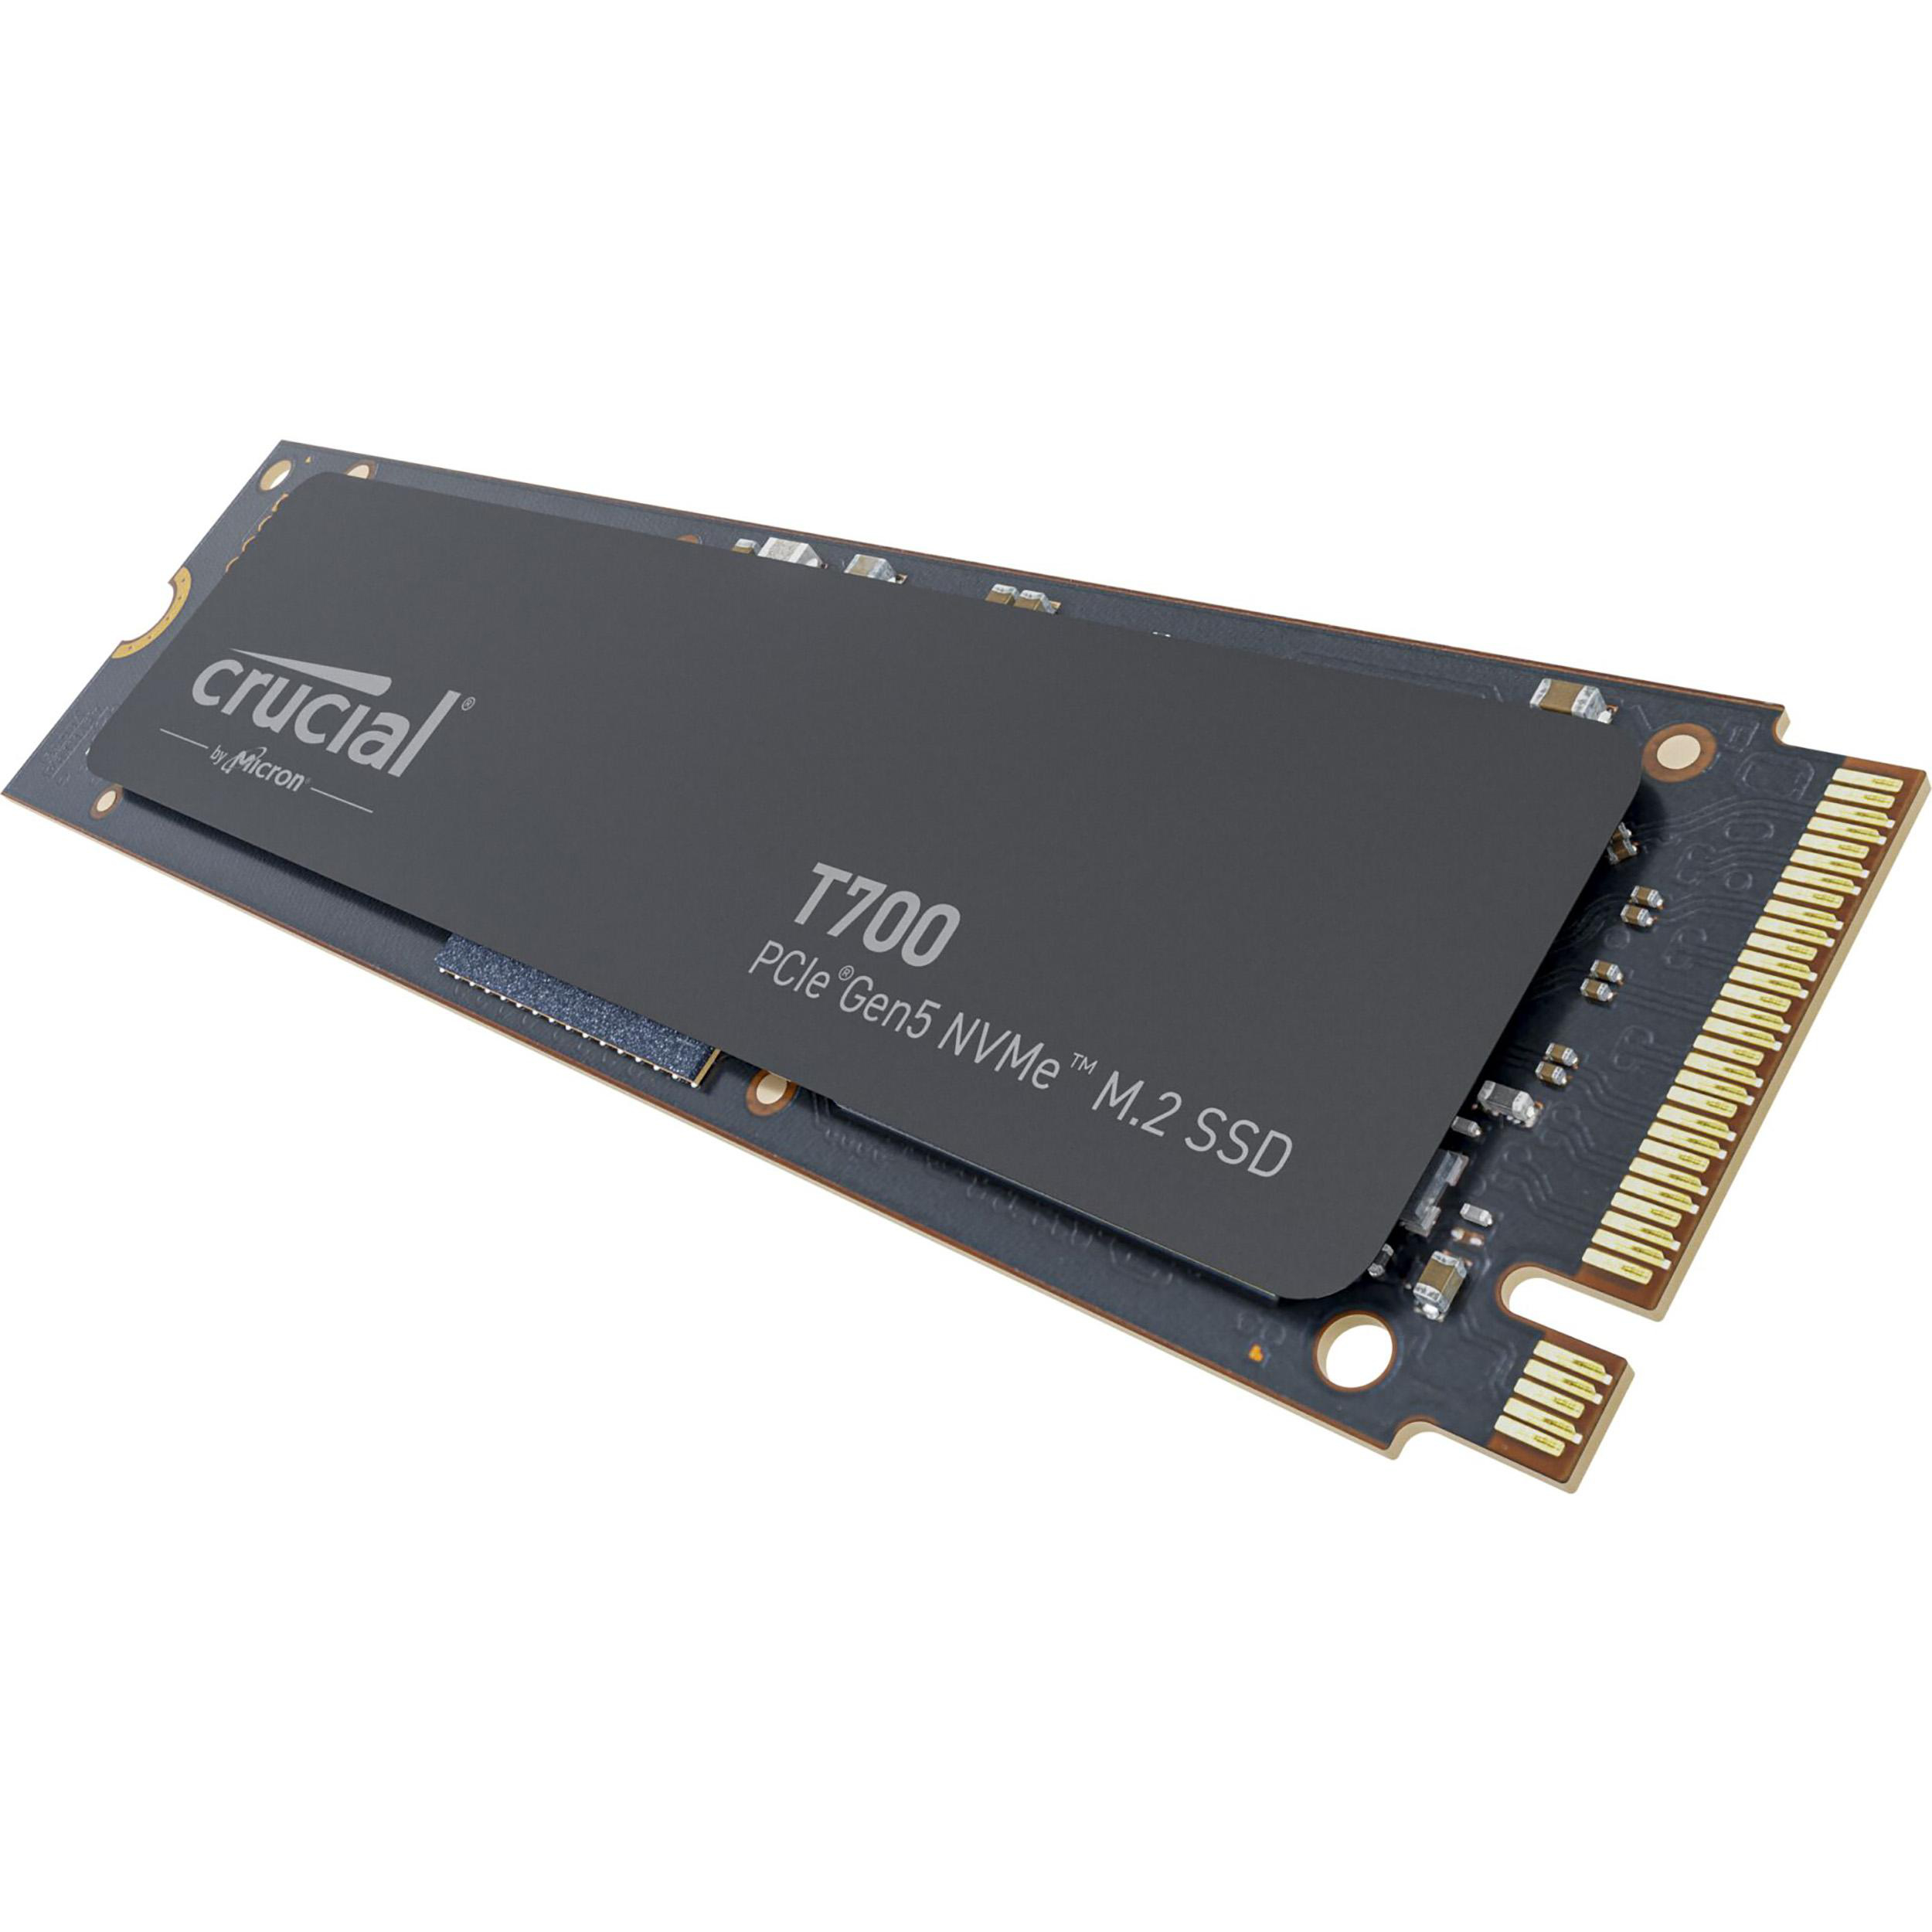 CRUCIAL T700 intern M.2 via PCIe SSD NVMe, SSD, Gen5 NVMe TB 2